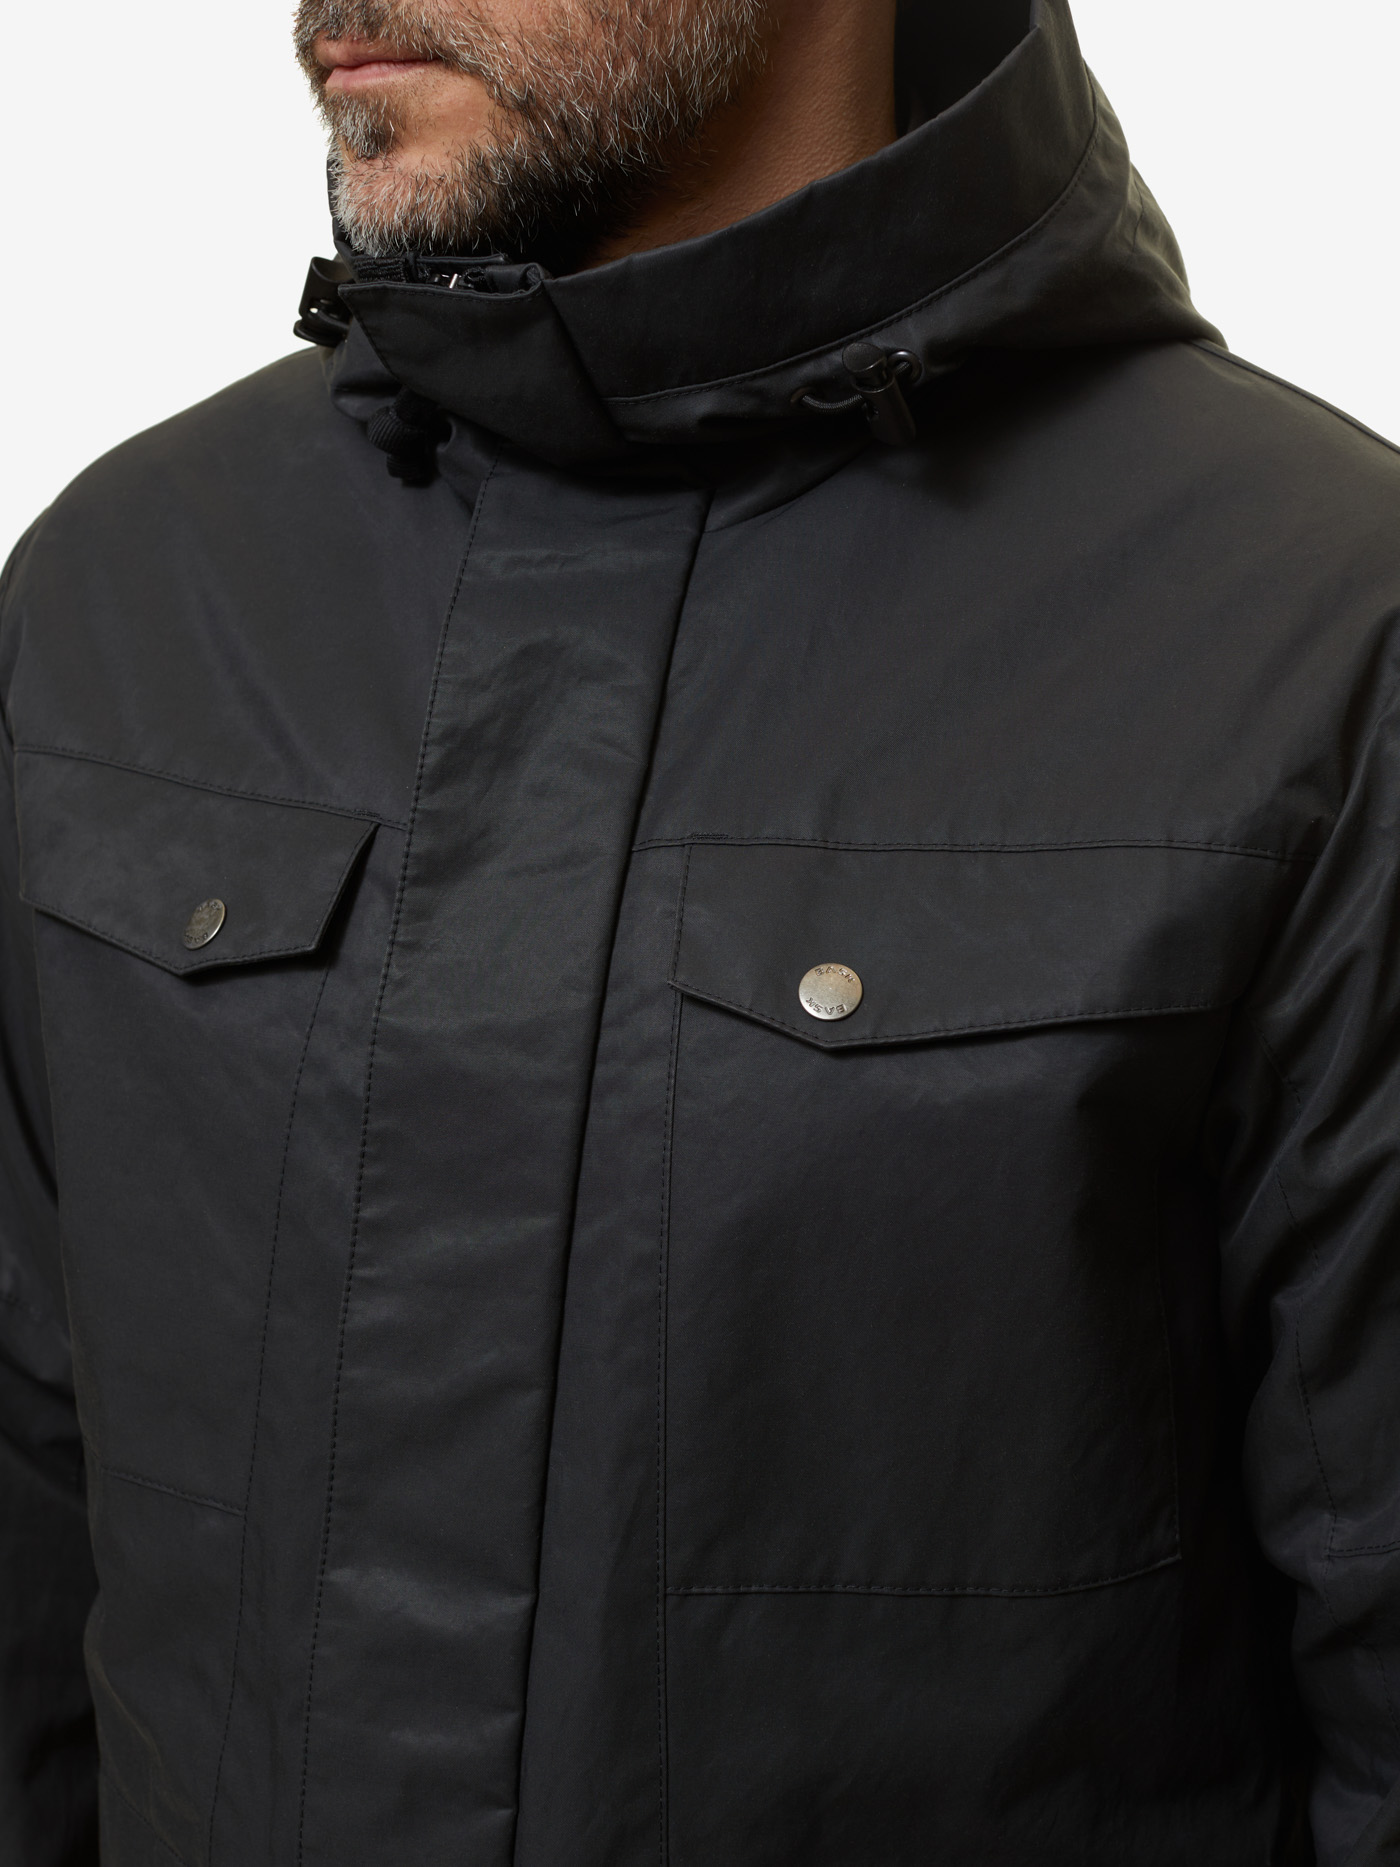 Куртка BASK, размер 50, цвет антрацит 22014-9674-050 Quebec v2 - фото 5